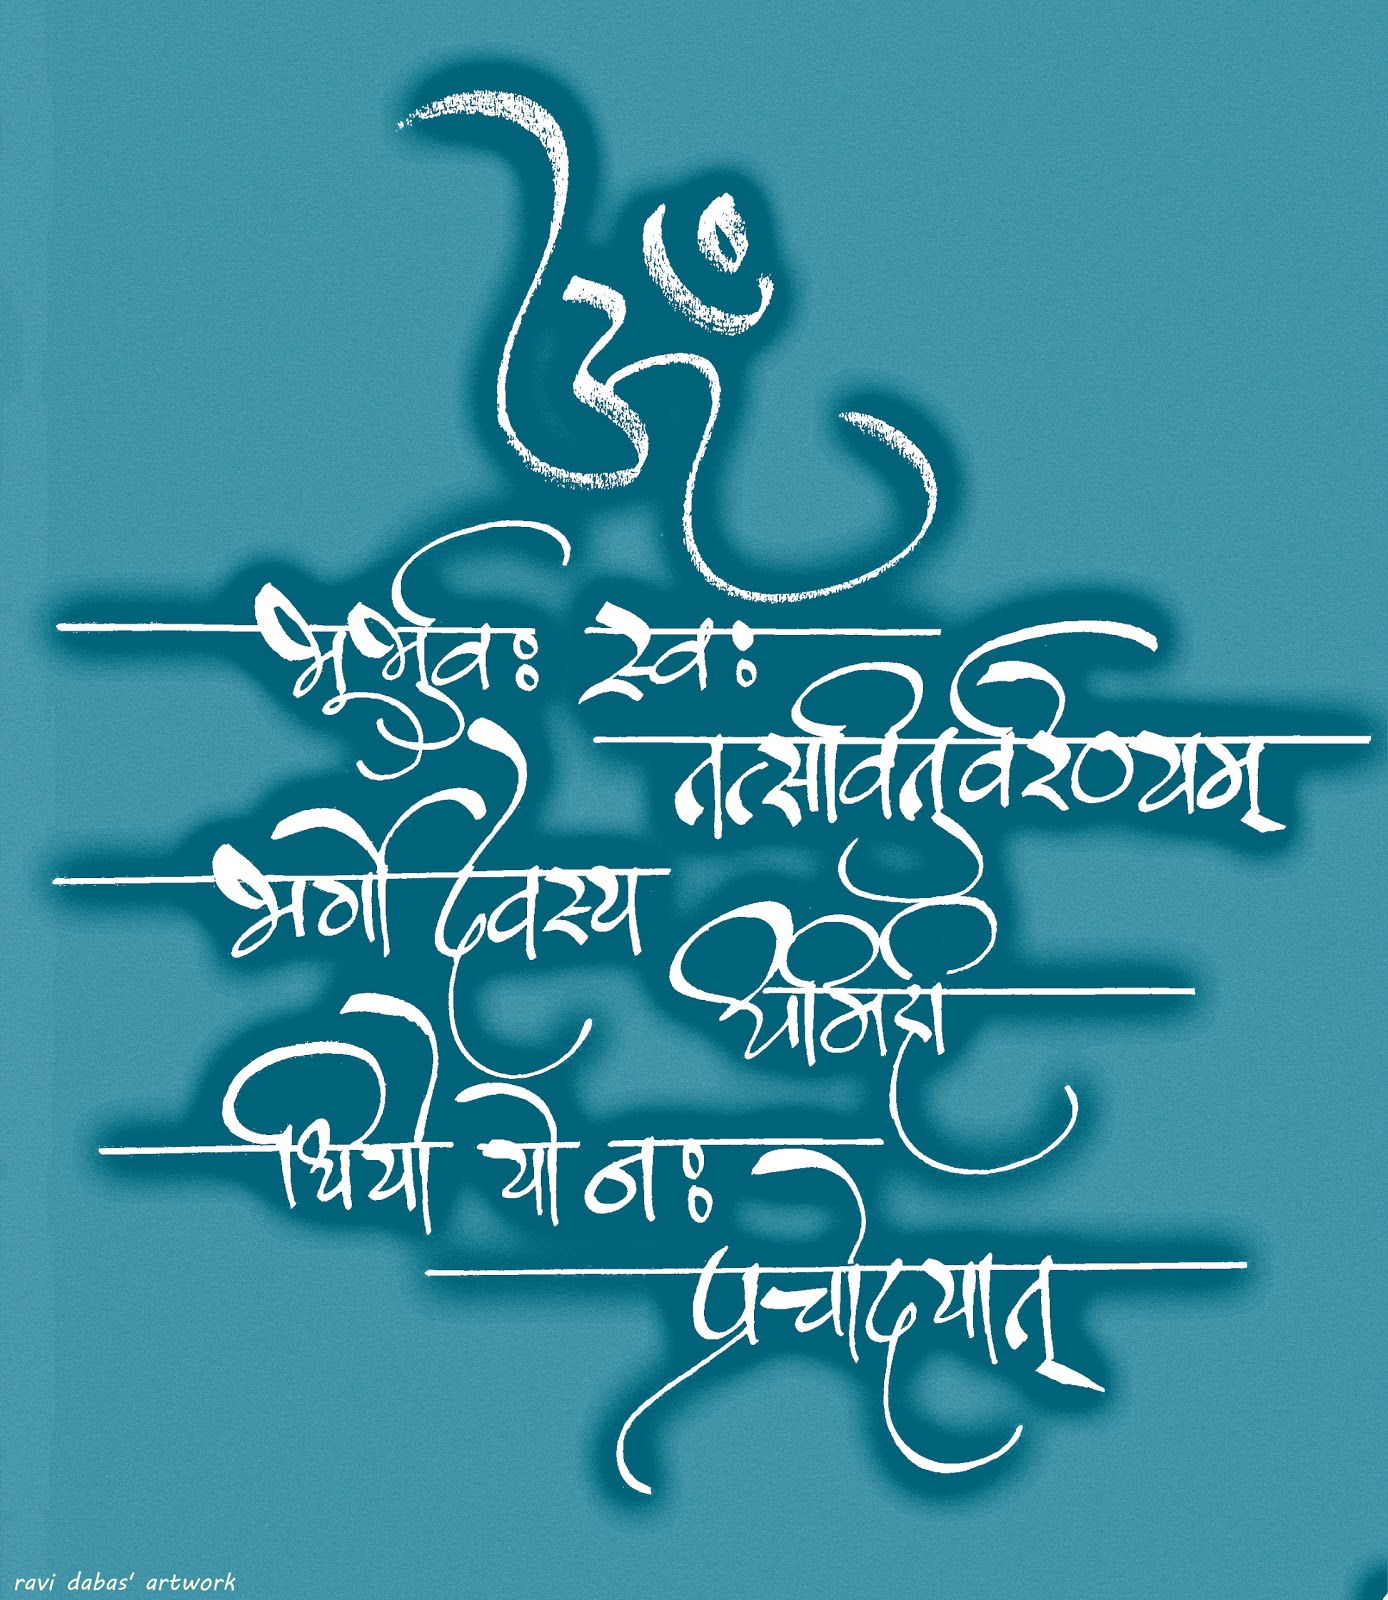 Gayatri mantra poster in sanskrit